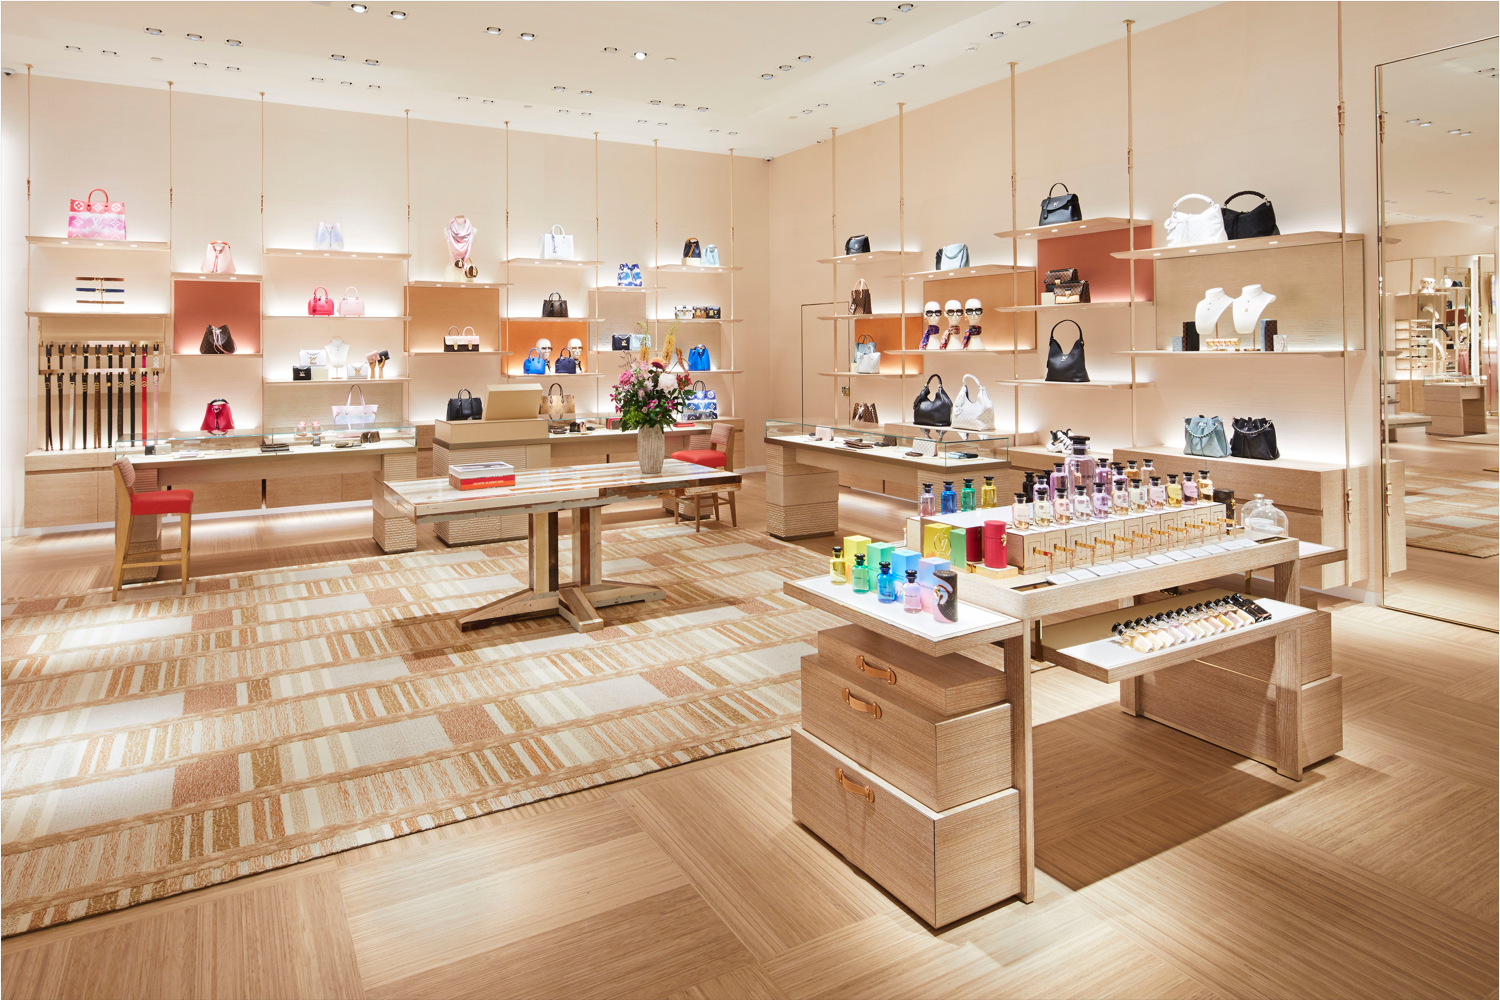 Rotterdam: Louis Vuitton shop-in-shop opening